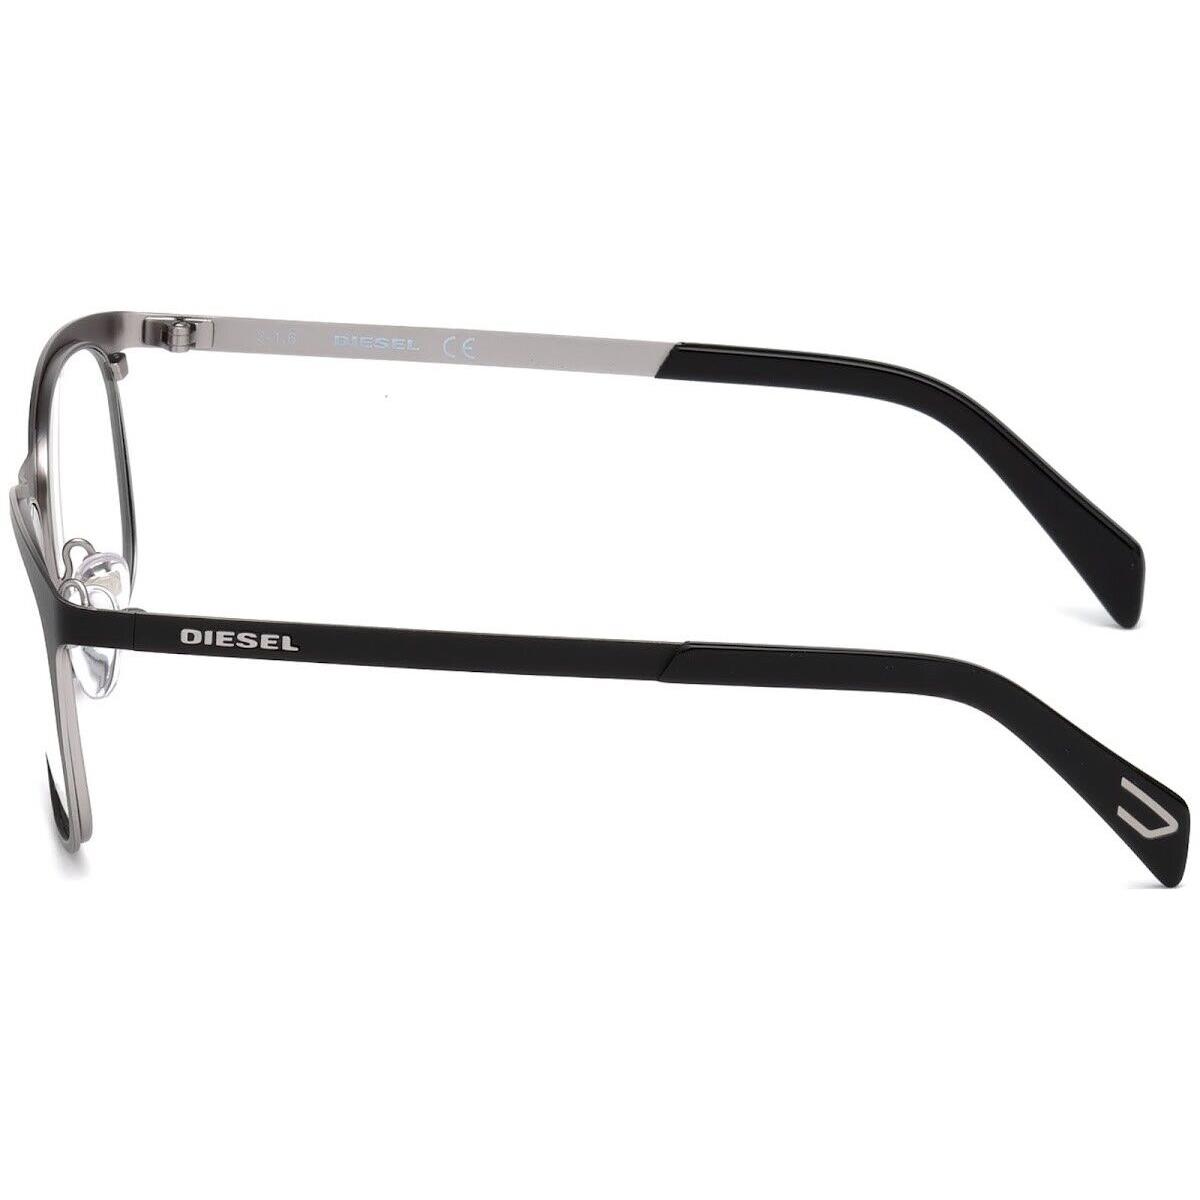 Diesel eyeglasses  - Black , Black Frame, Clear Lens 0